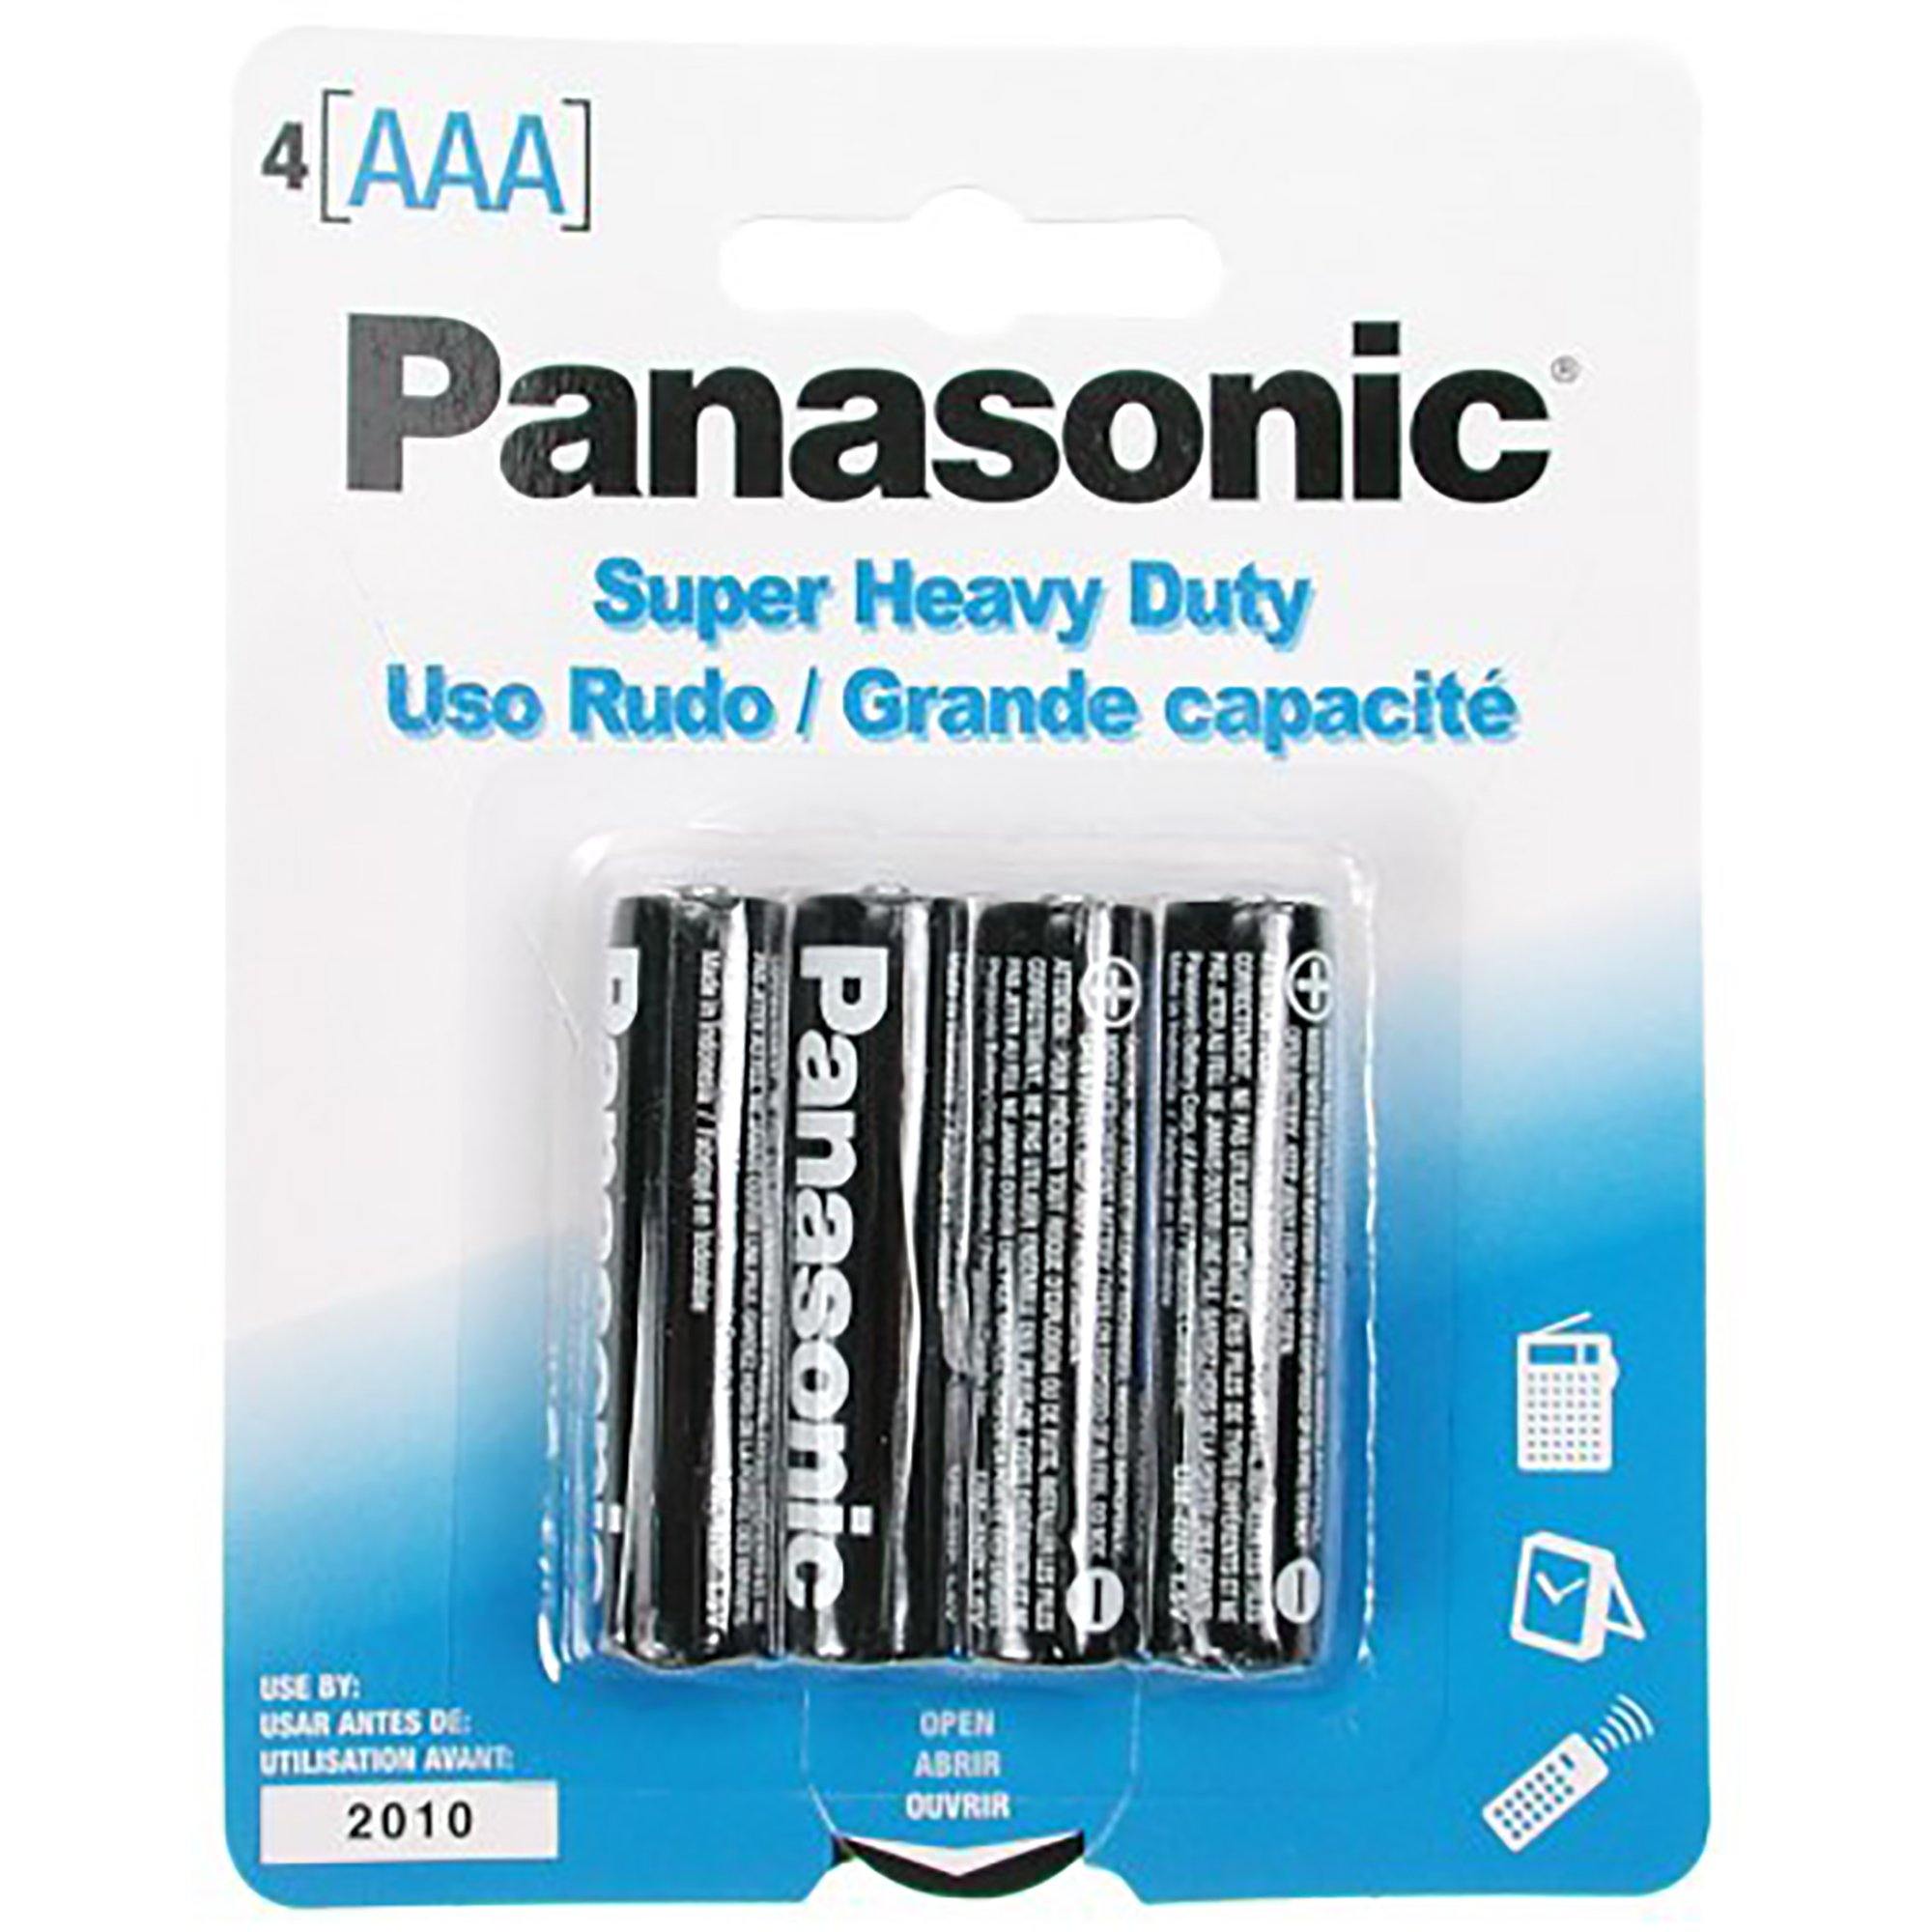 Panasonic Batteries Aaa (4) - Dollar Max Dépôt